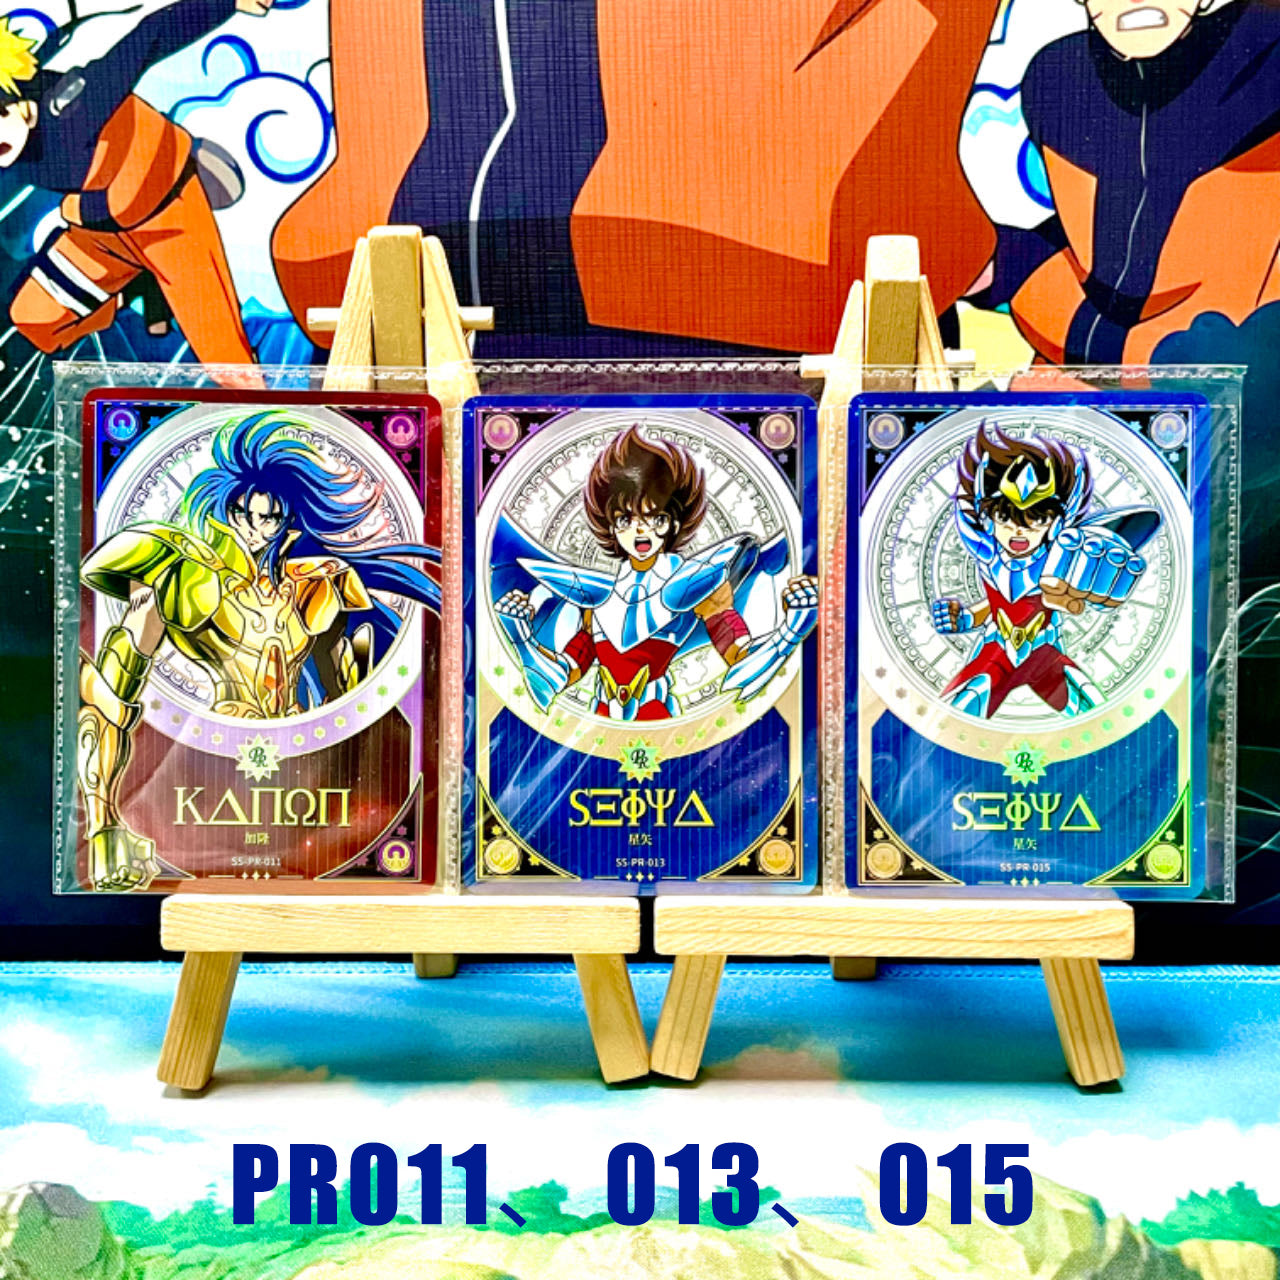 Set - Saint Seiya BP/UR/PR/AR/SSR/SR/R Card  Full Set